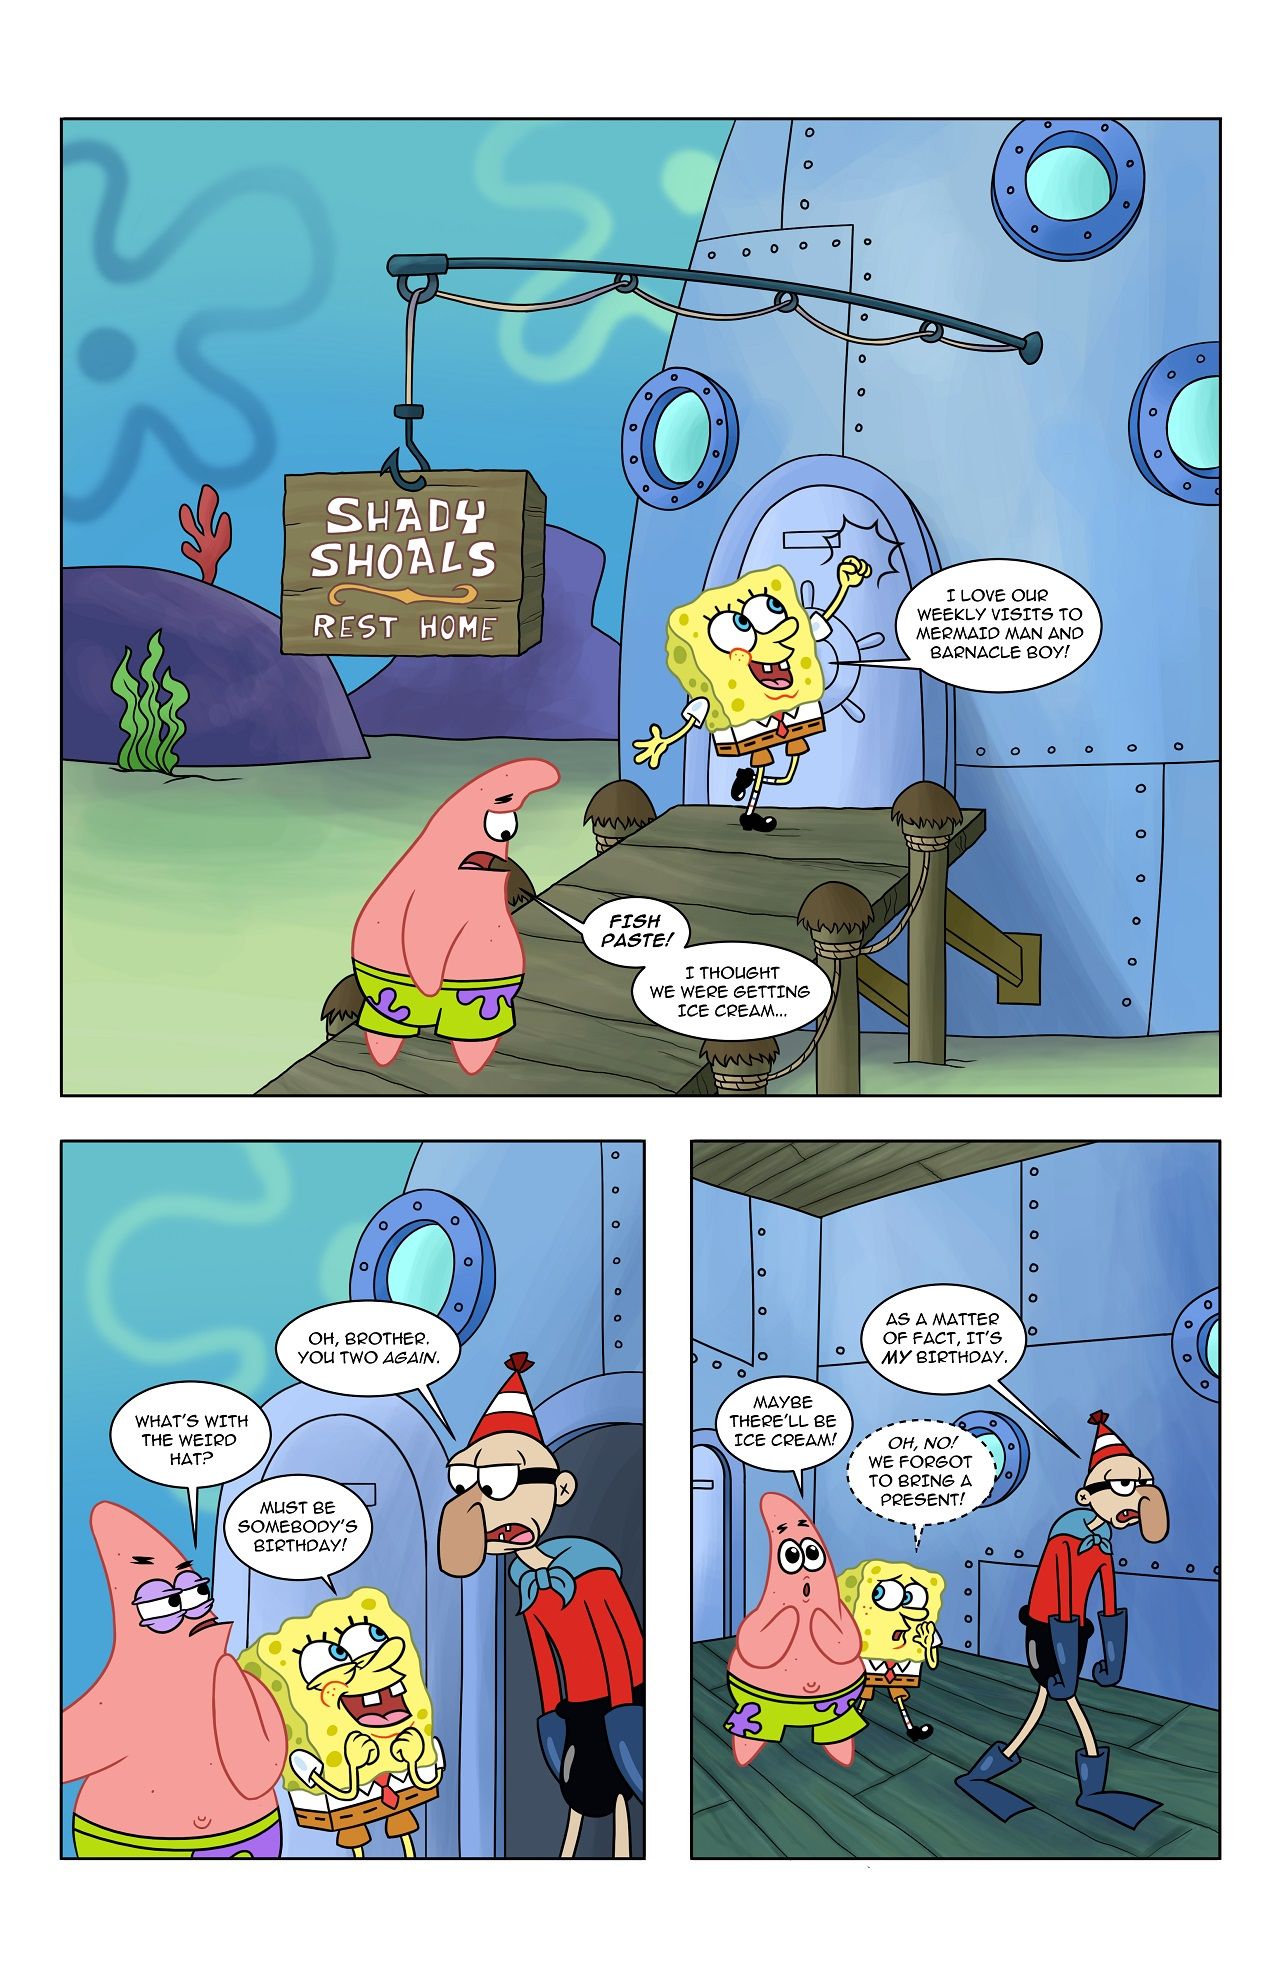 20 Hilarious SpongeBob SquarePants Fan Comics Only True Fans Will Understand